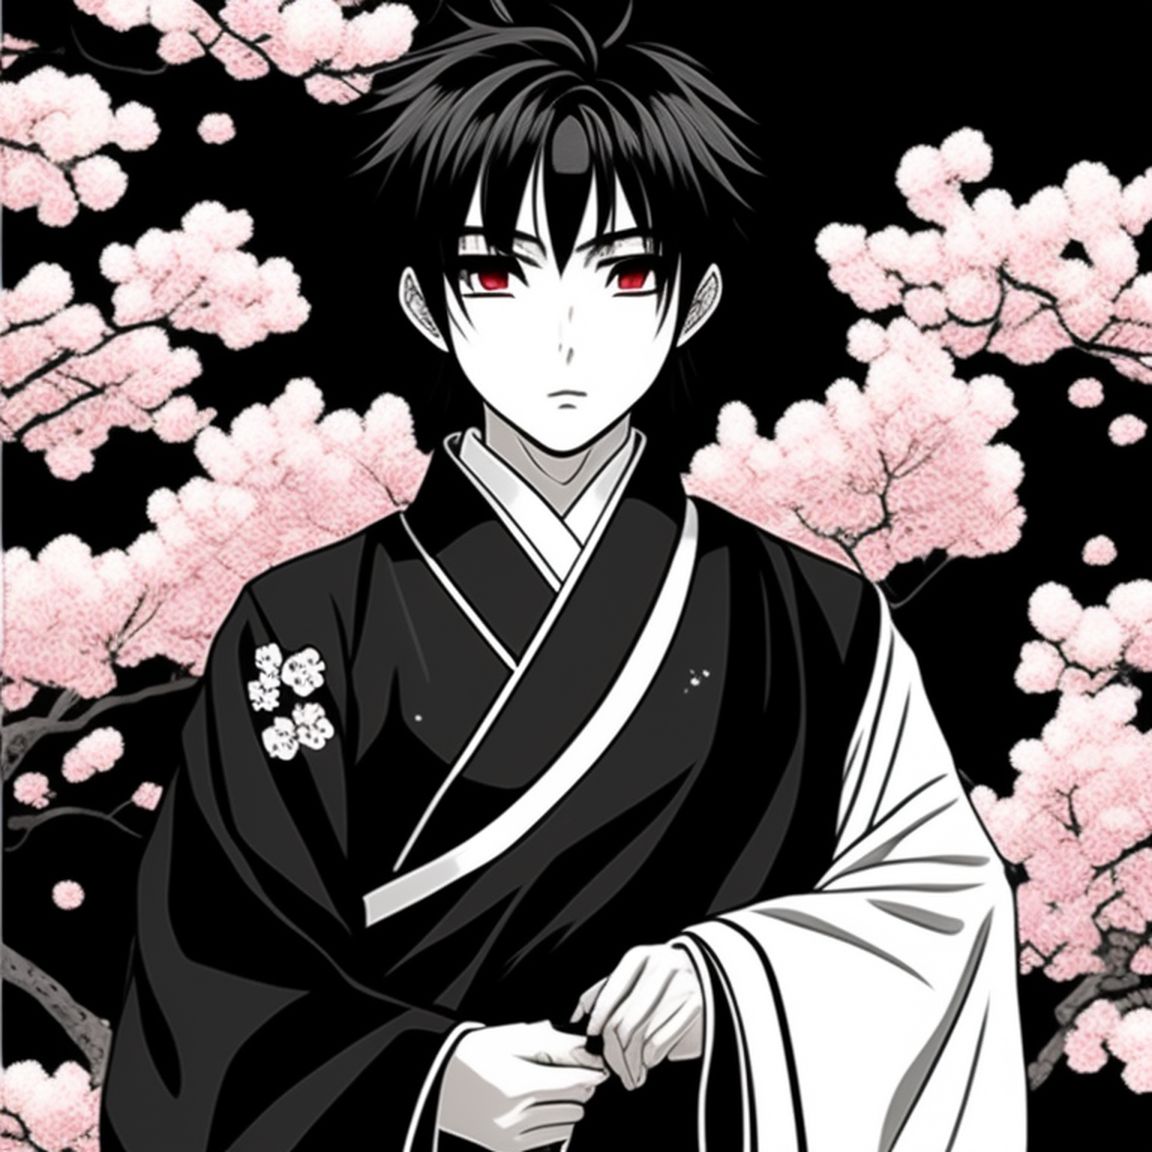 manga anime boy in black and white wearing a kimono with sakura pattern, Japanese anime comic style, Anime style, Anime line art